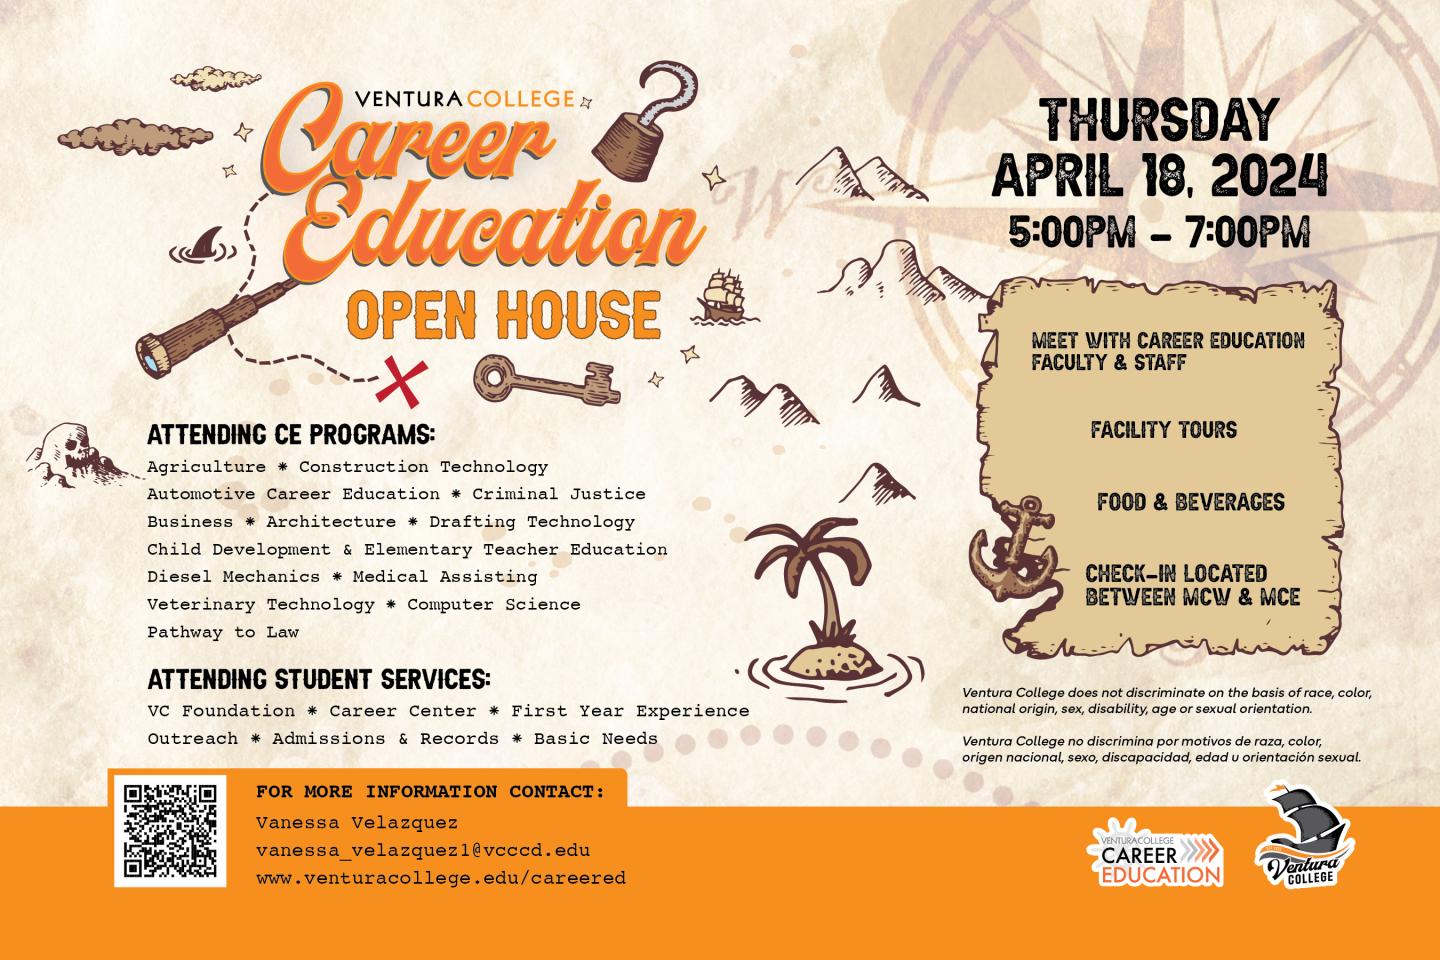 Ventura College Career Education Open House Flyer 2024